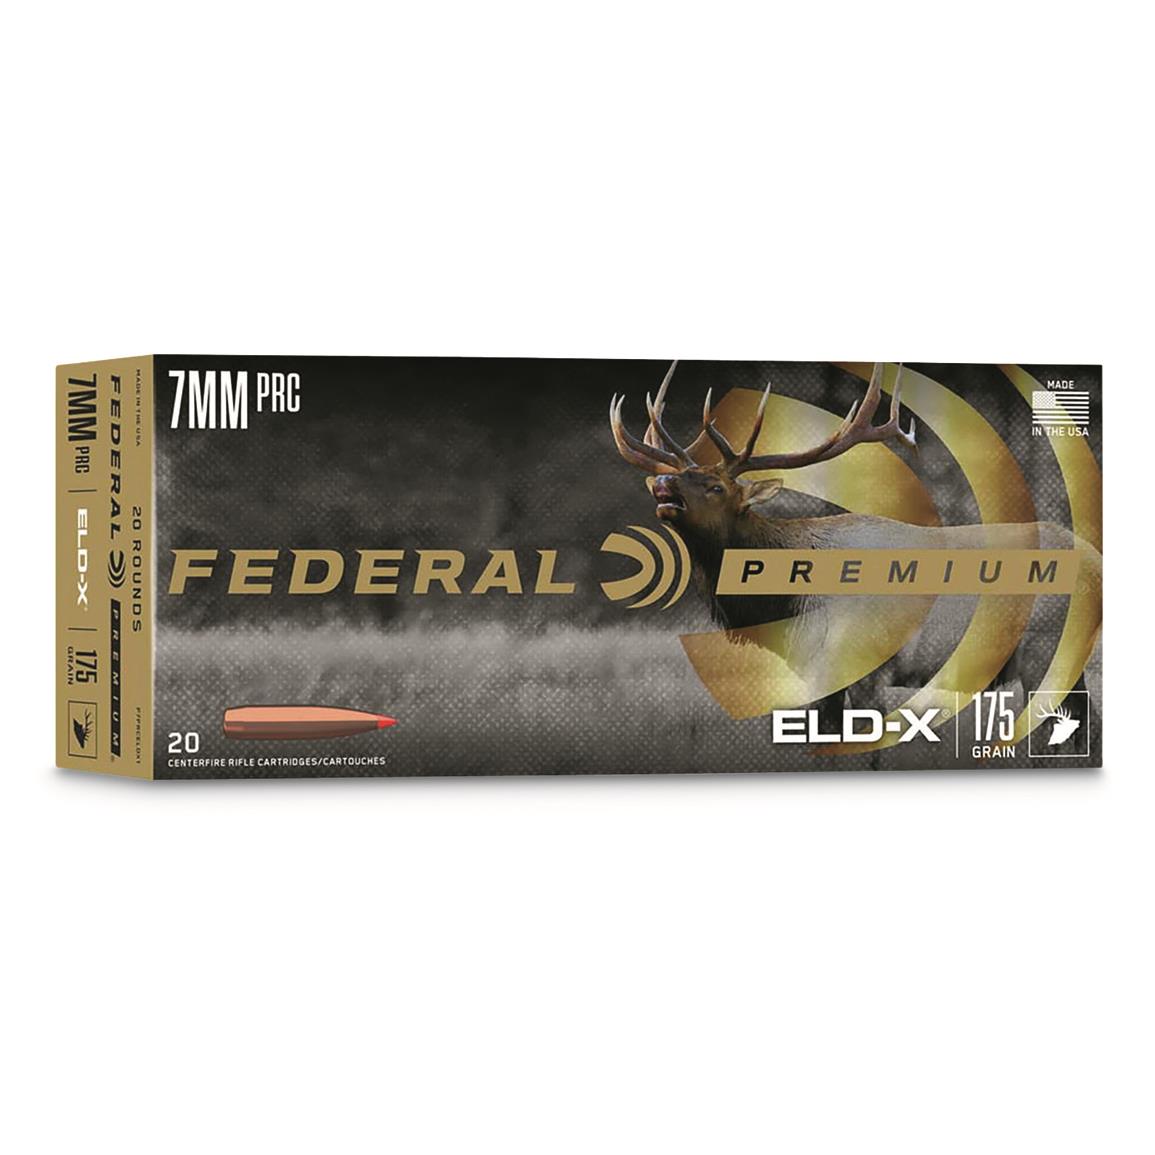 Federal Premium, 7mm PRC, ELD-X, 175 Grain, 20 Rounds